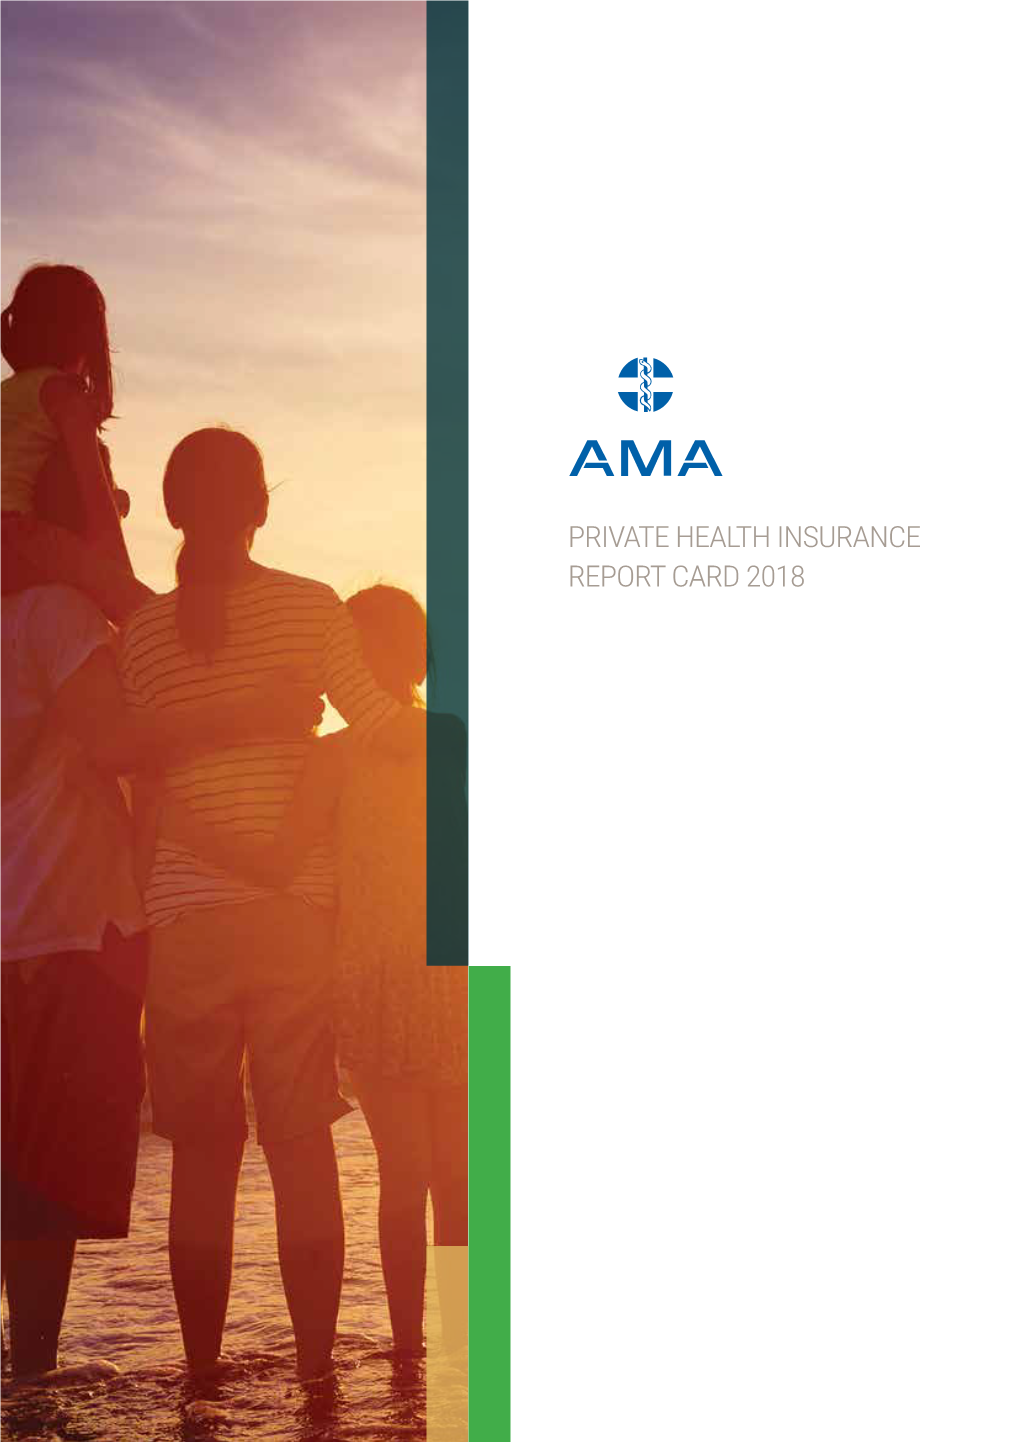 Private Health Insurance Report Card 2018 Ama Private Health Insurance Report Card 2018